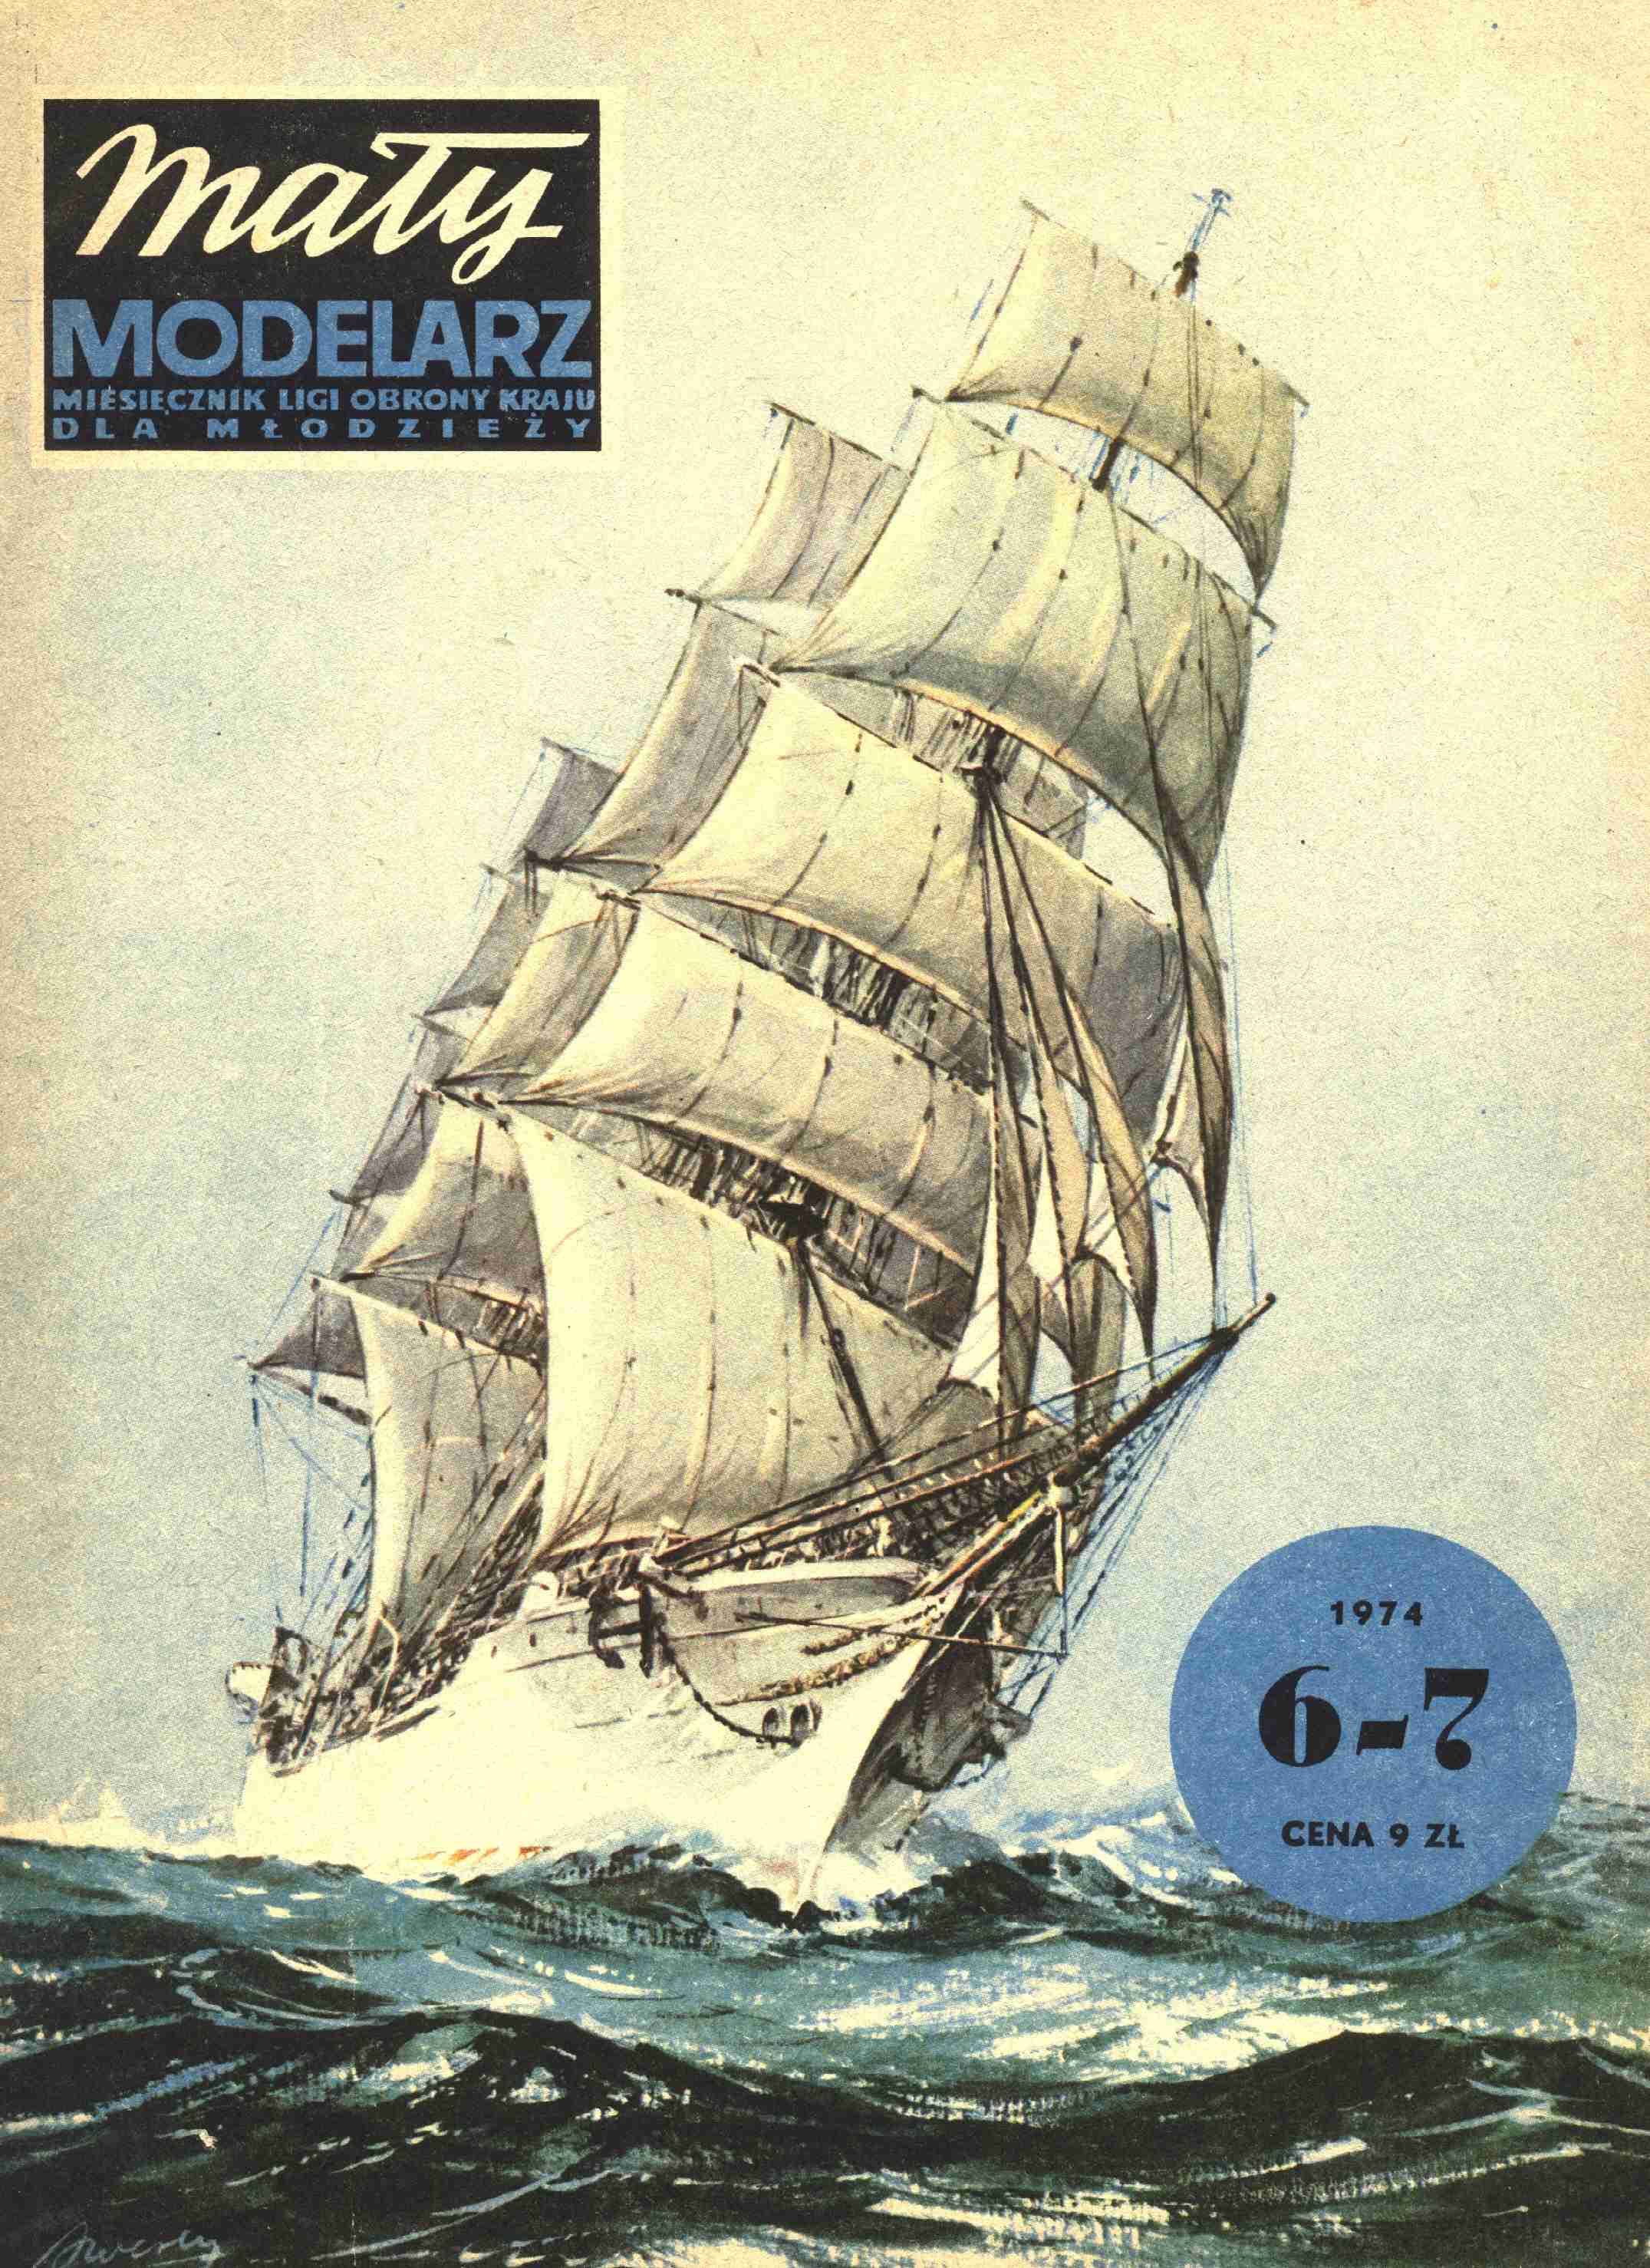 "Maly Modelarz" 6-7, 1971